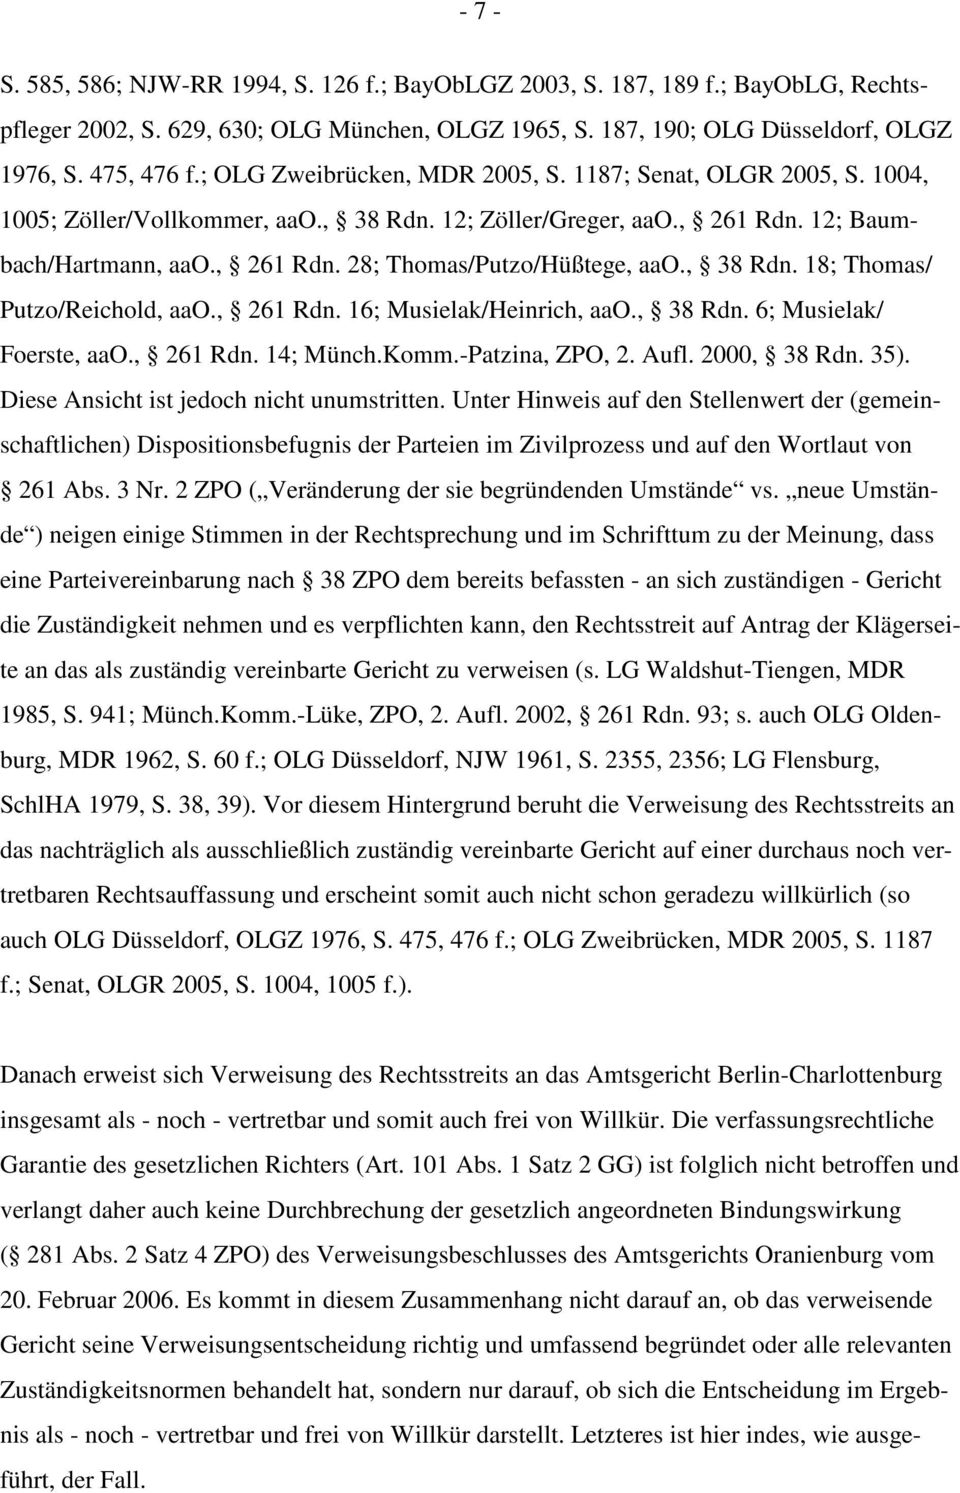 , 38 Rdn. 18; Thomas/ Putzo/Reichold, aao., 261 Rdn. 16; Musielak/Heinrich, aao., 38 Rdn. 6; Musielak/ Foerste, aao., 261 Rdn. 14; Münch.Komm.-Patzina, ZPO, 2. Aufl. 2000, 38 Rdn. 35).